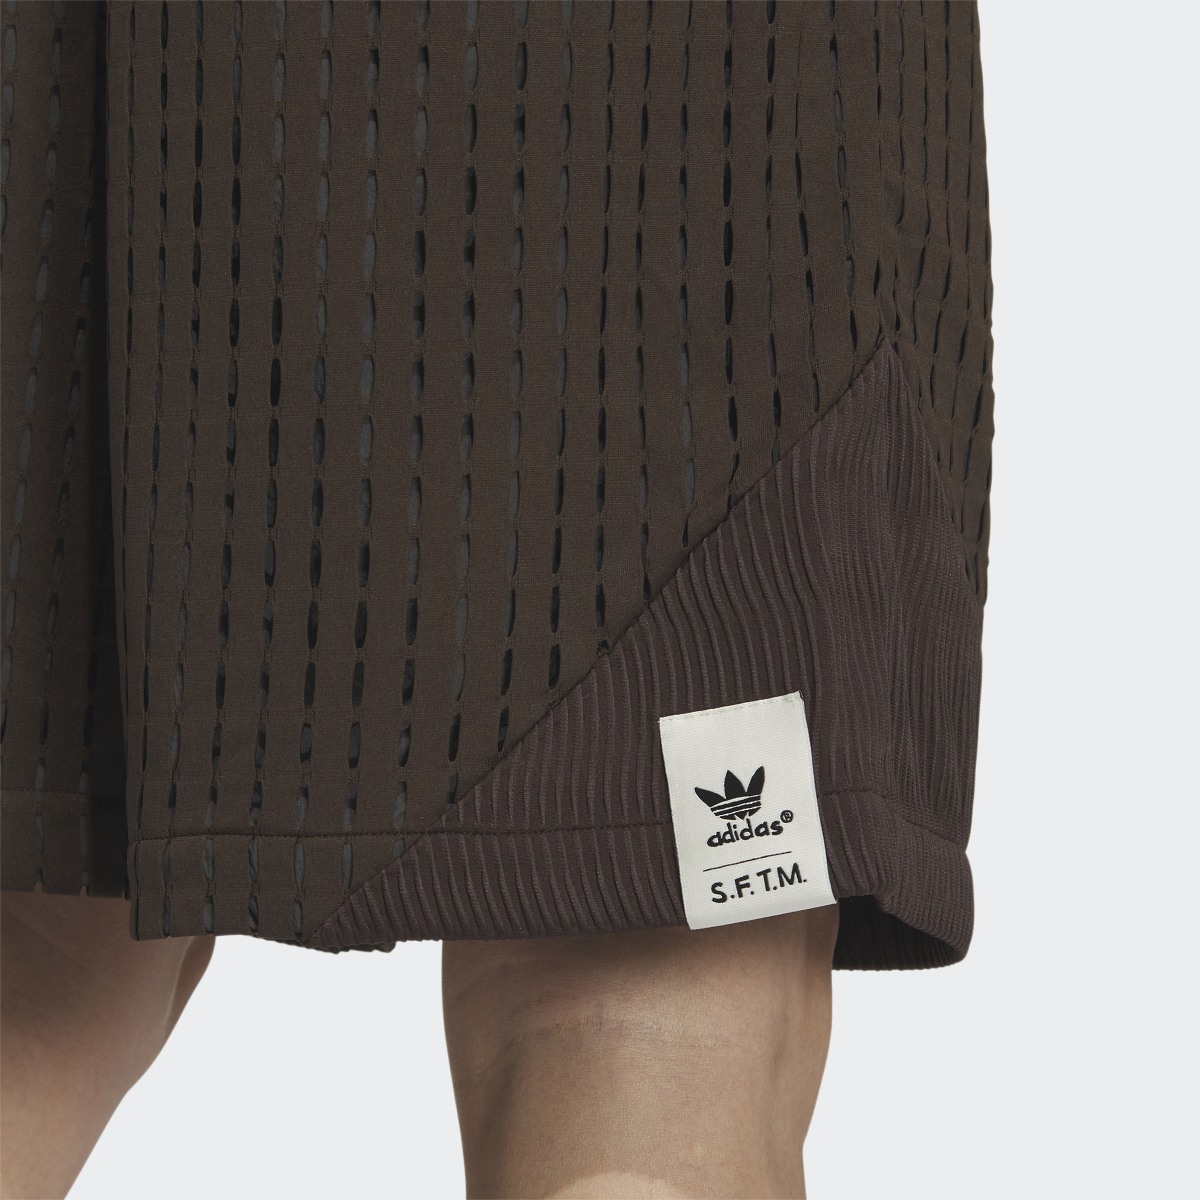 Adidas SFTM Shorts – Genderneutral. 6